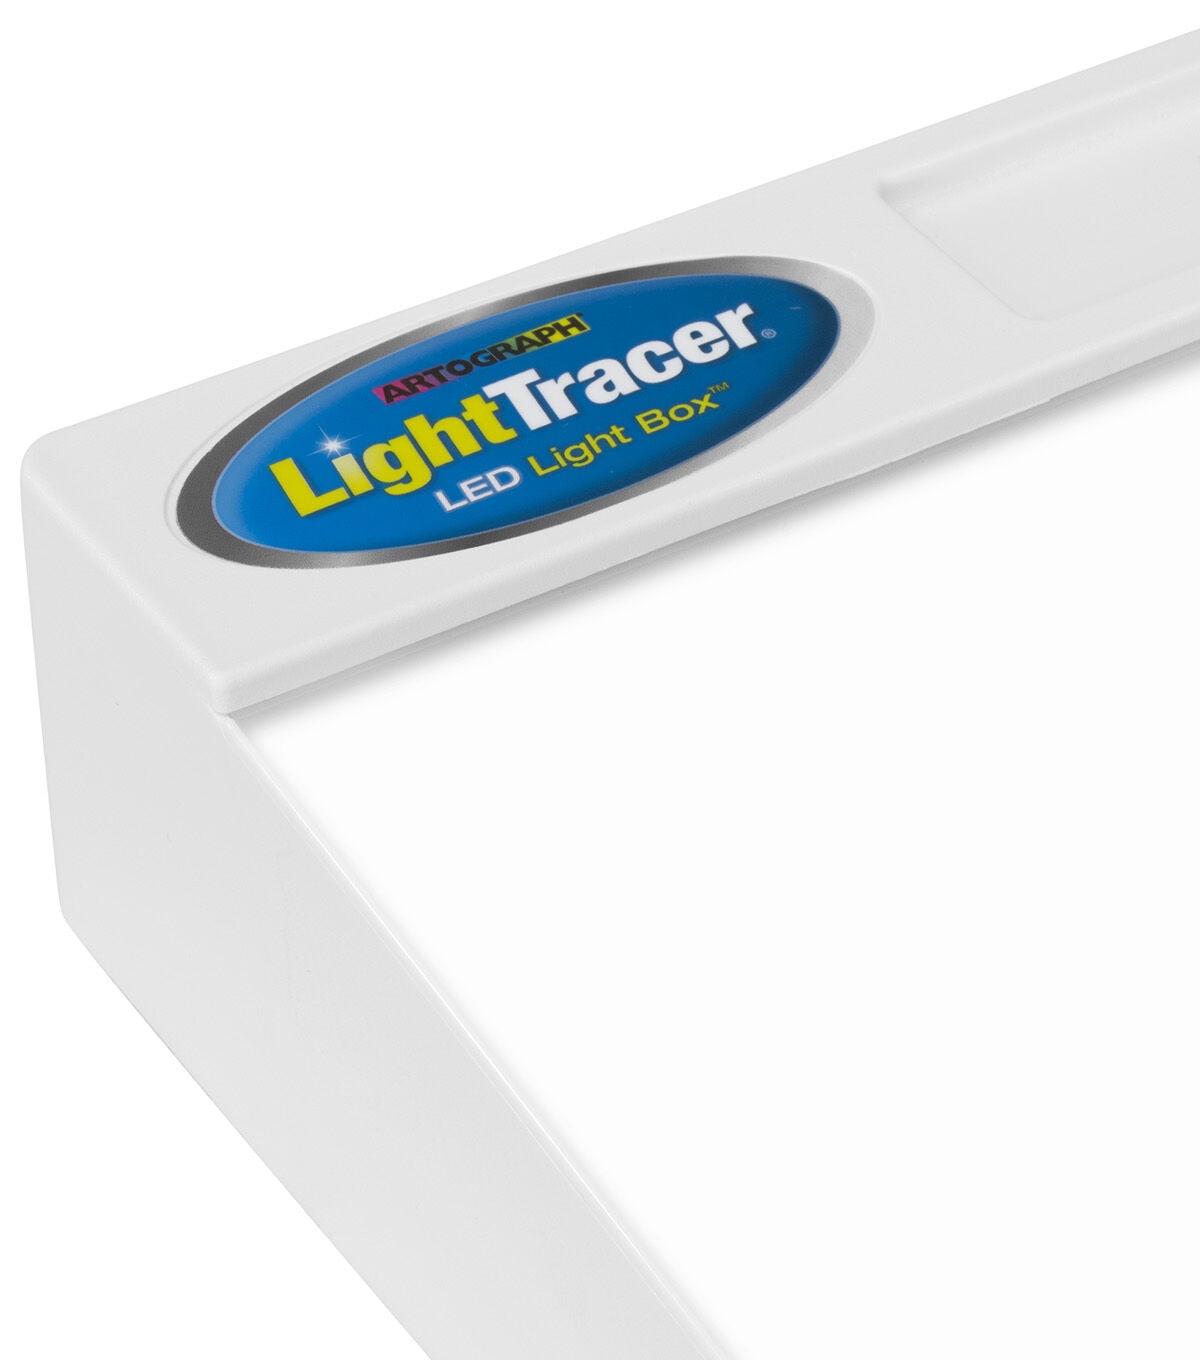 Light Tracer Light Box - Tracing Light Boxes